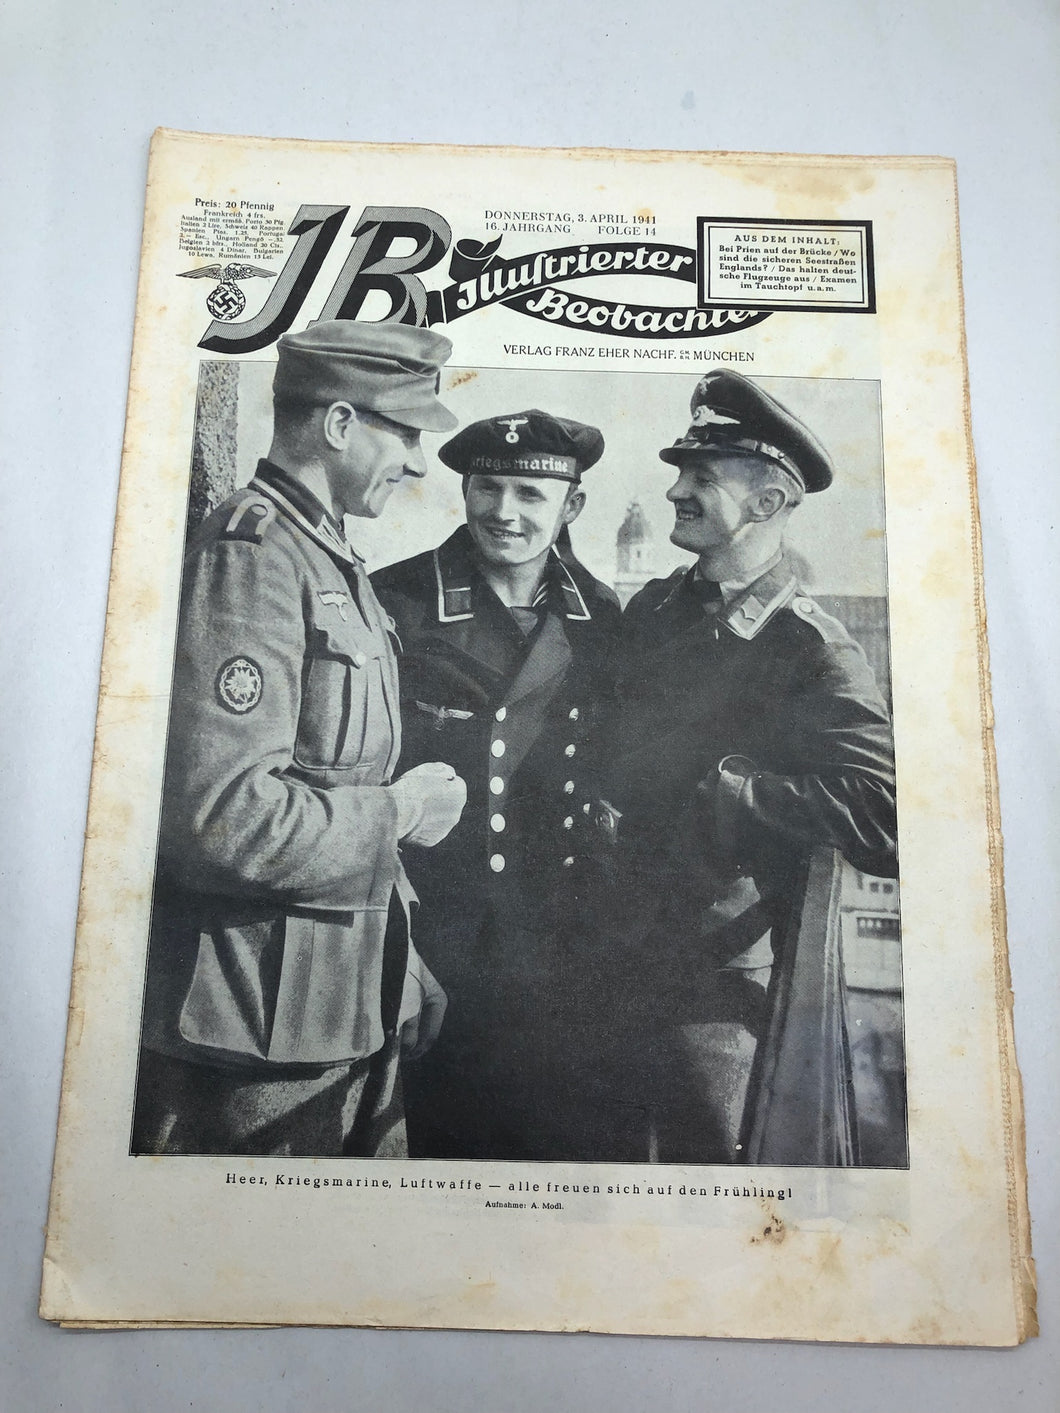 JB Juustrierter Beobachter NSDAP Magazine Original WW2 German - 3 April 1941